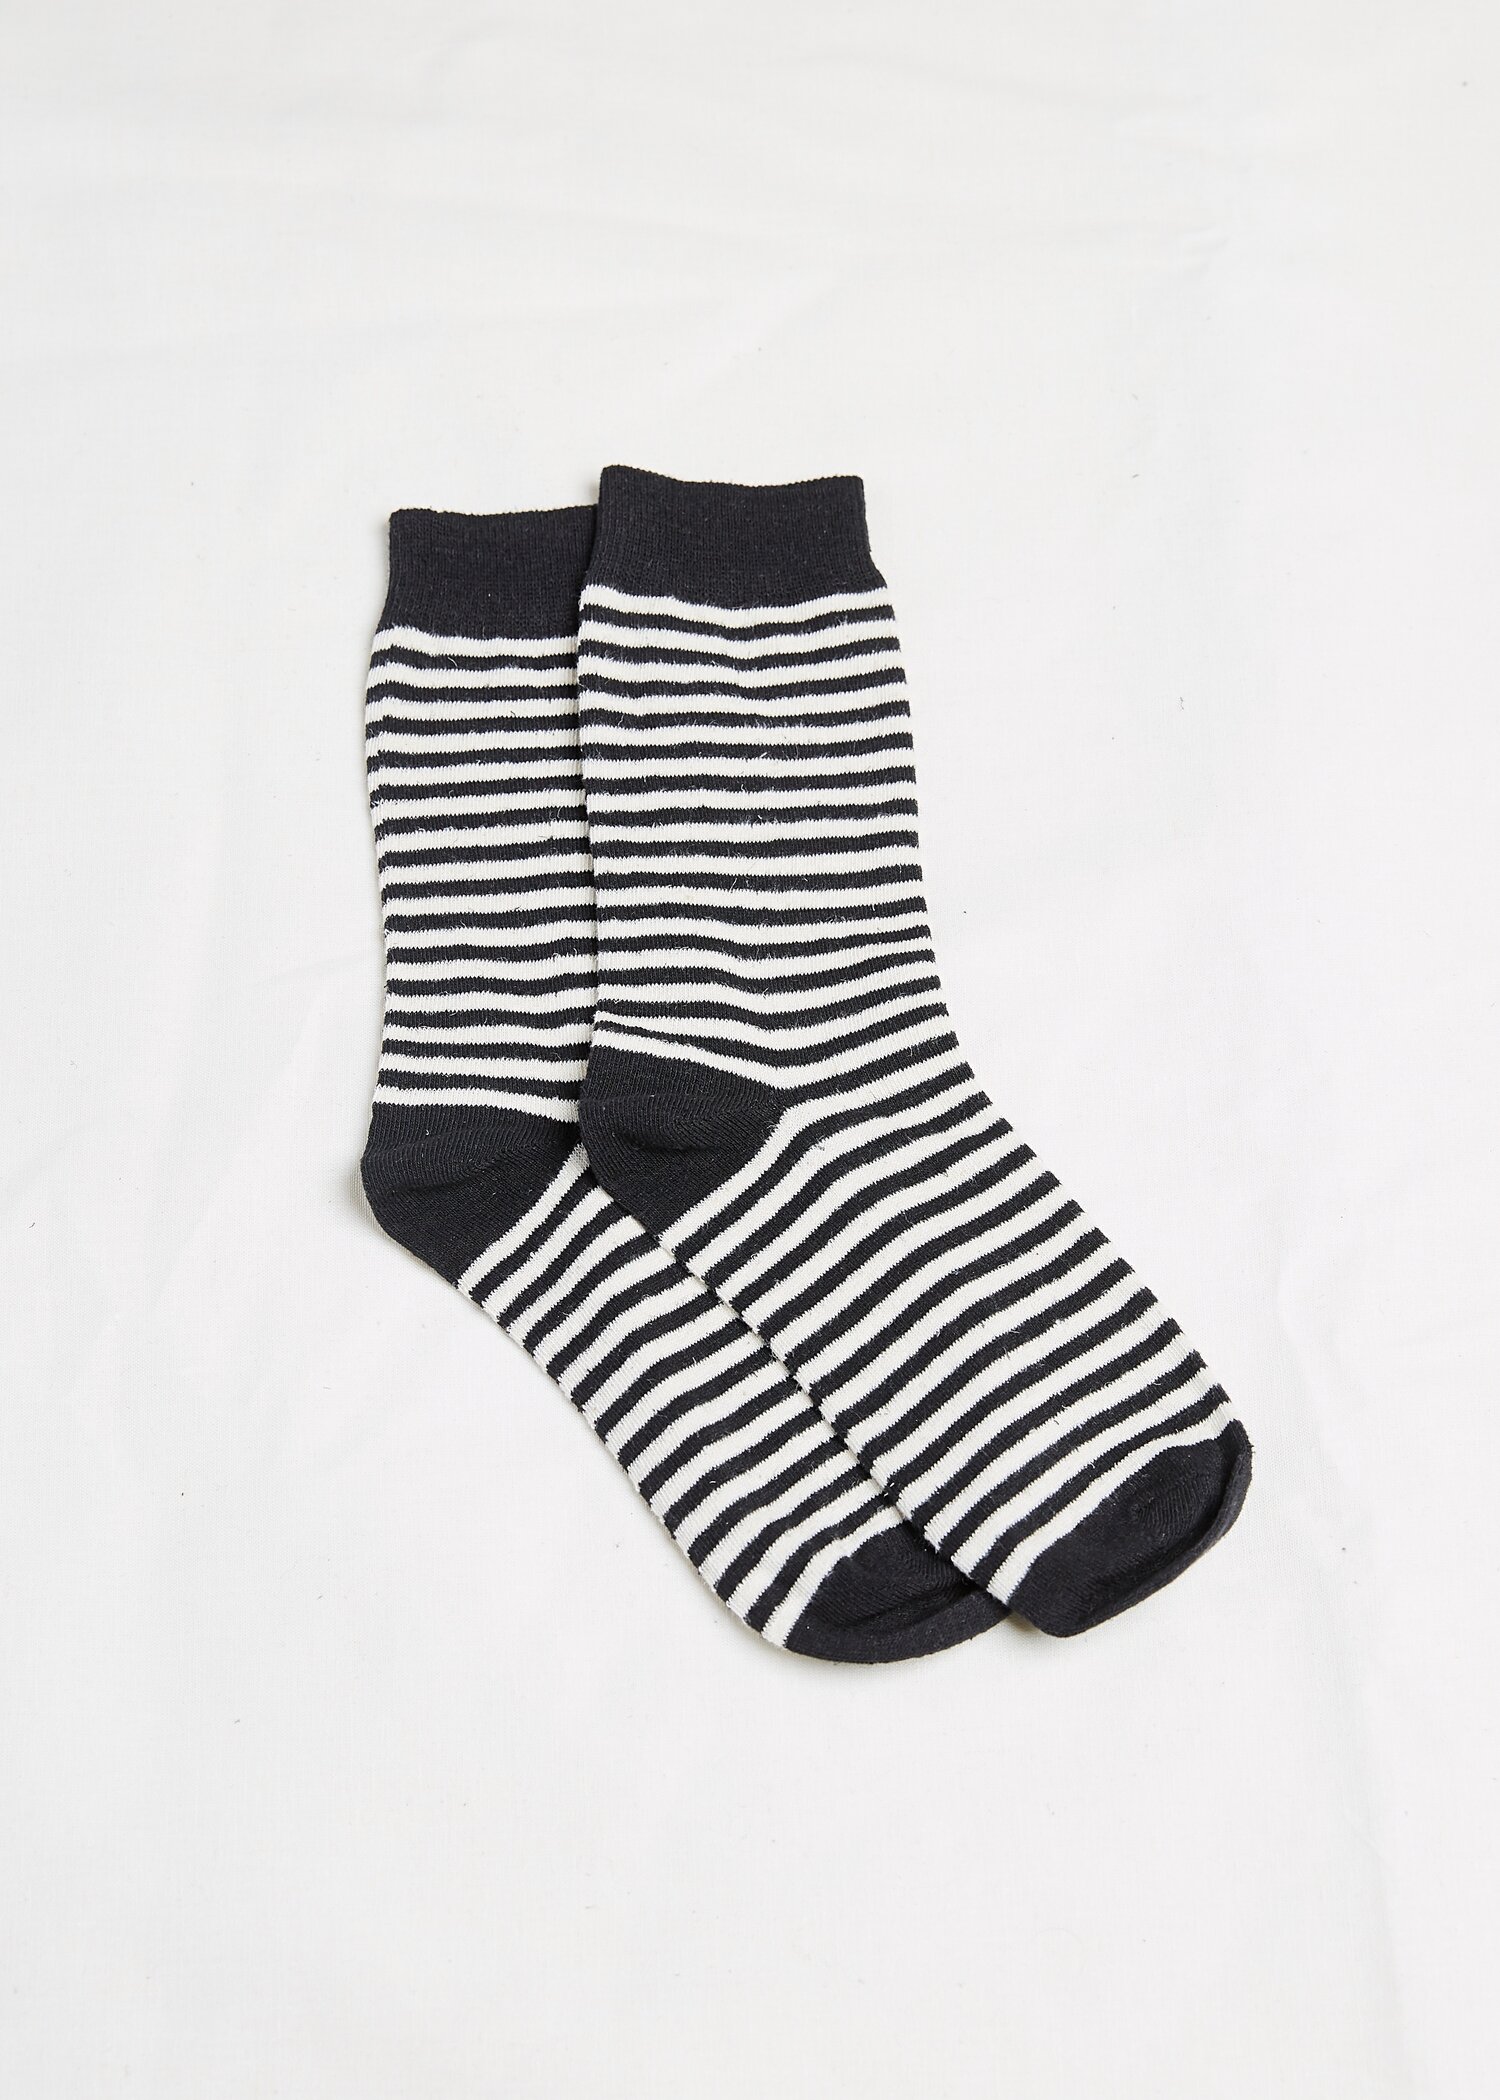 Buy Hemp Clothing Australia - Daily Socks - Black Stripe Online - Hemp ...